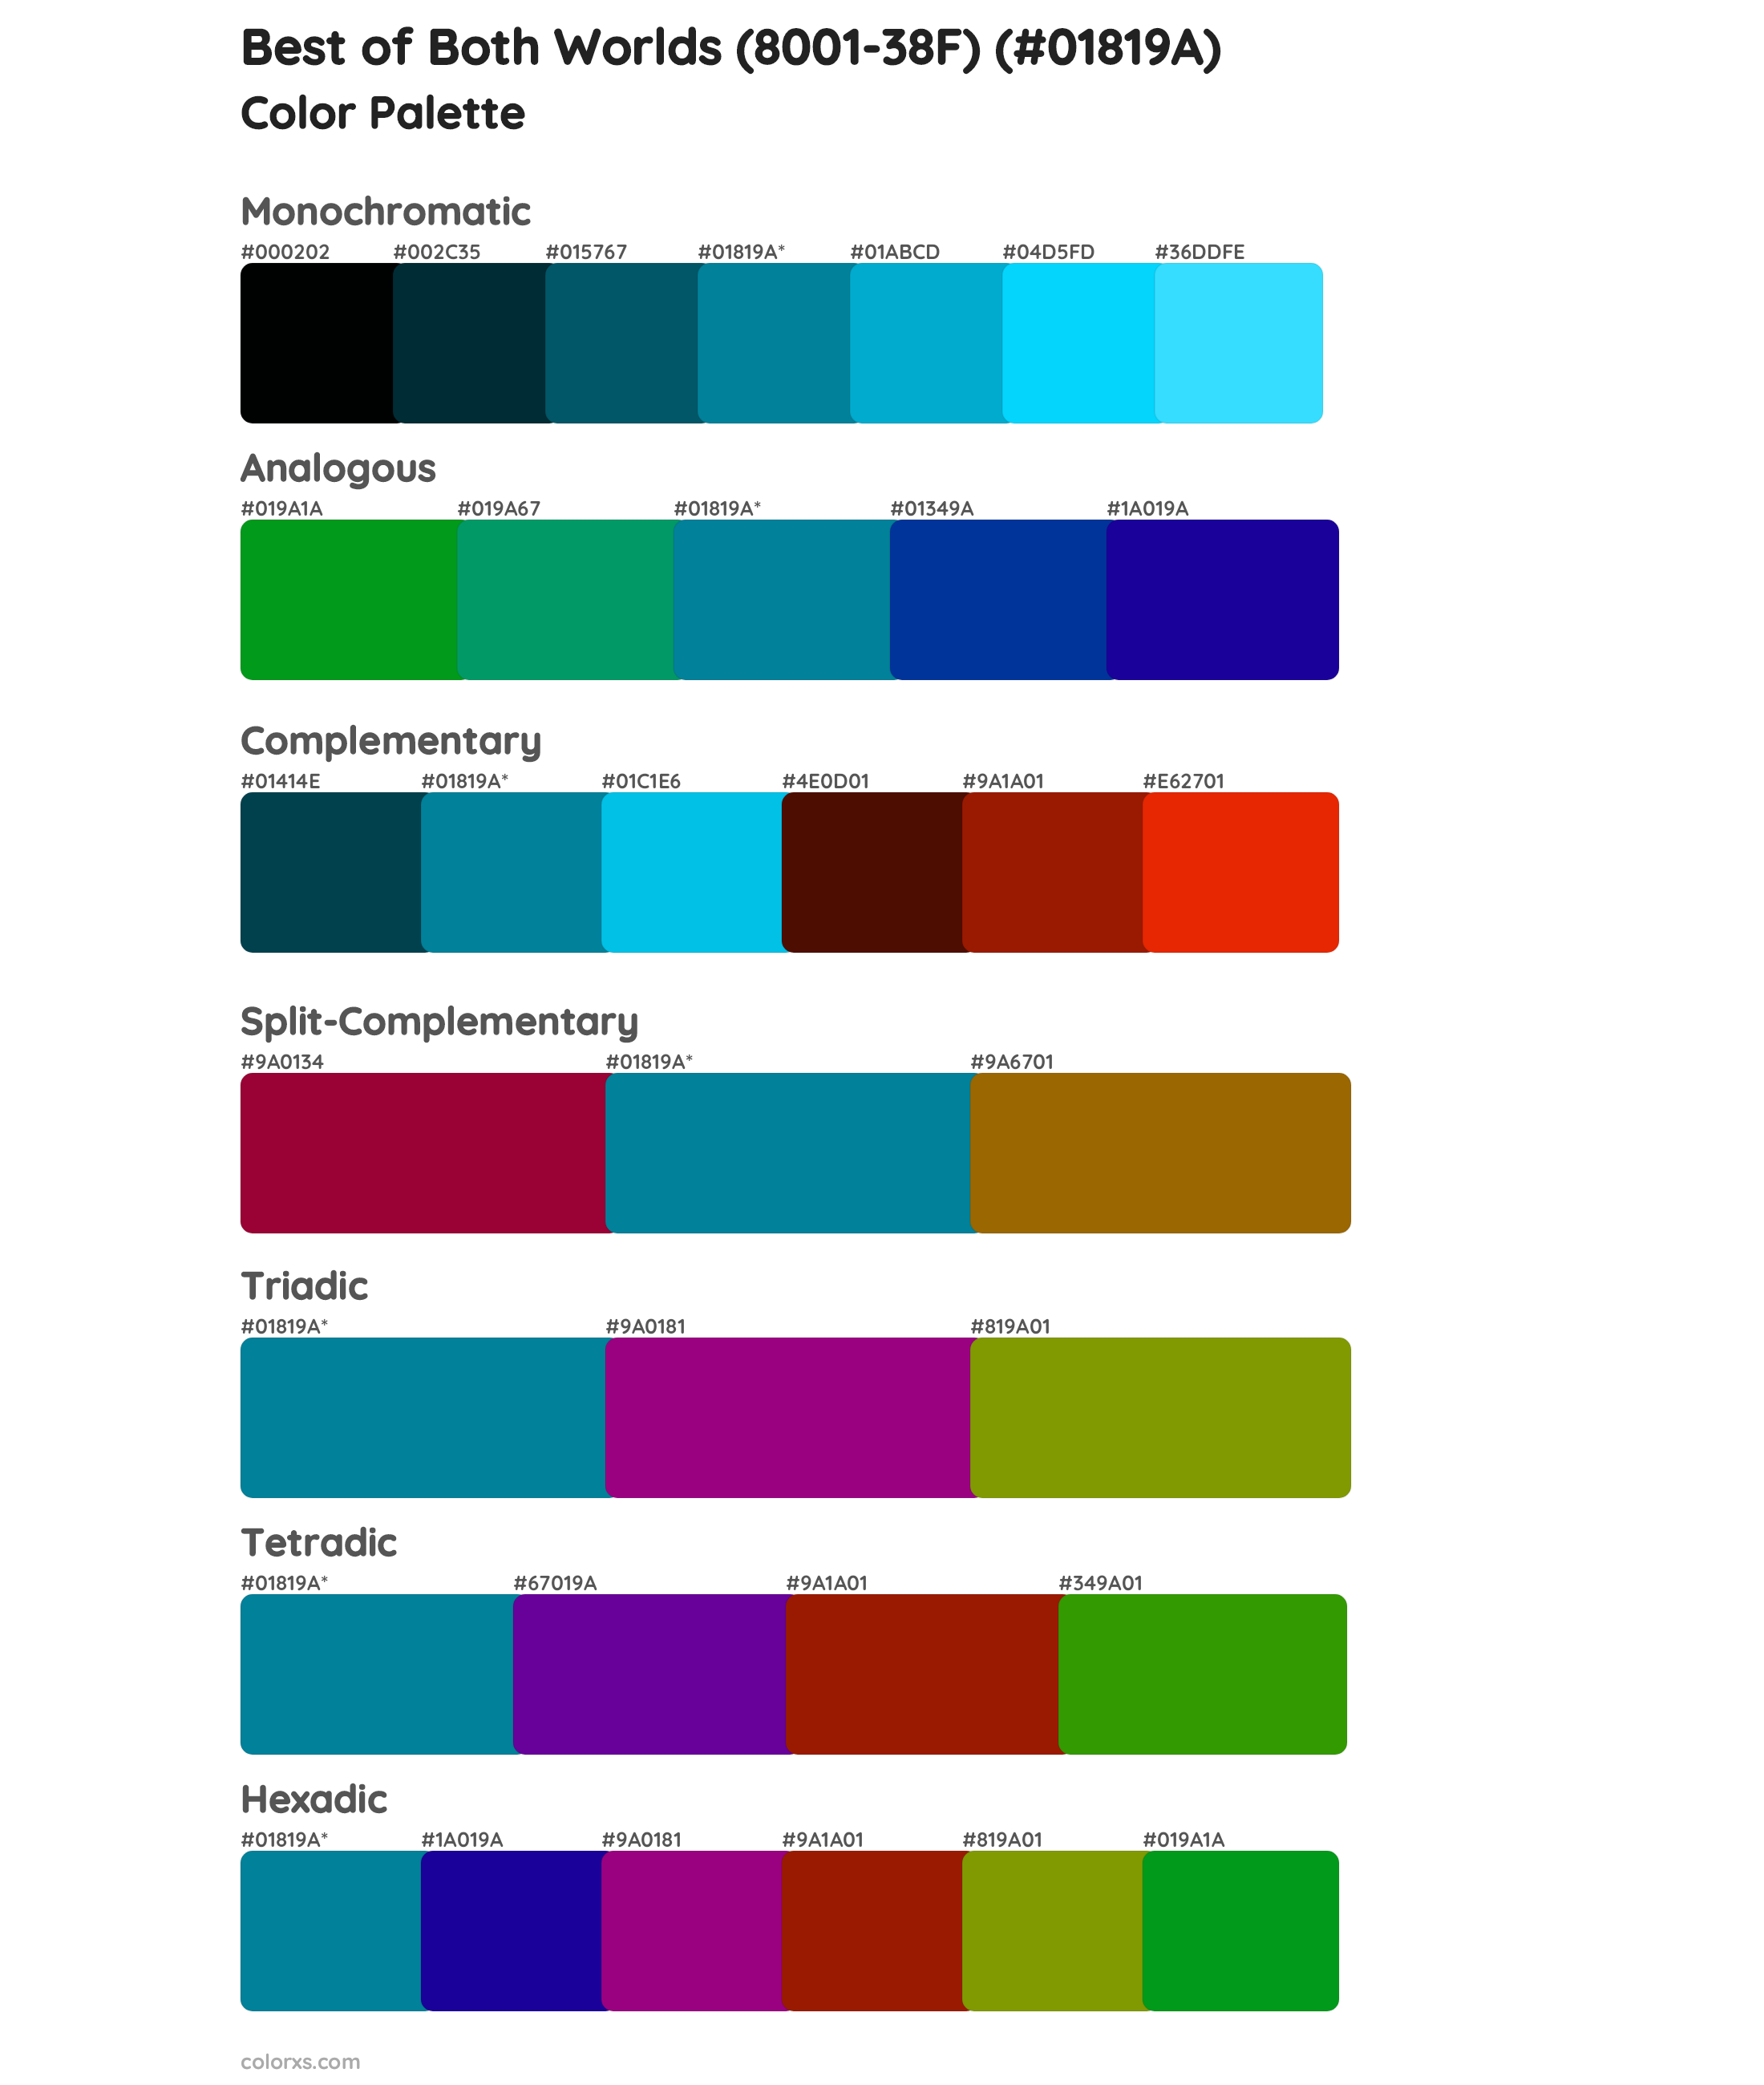 Best of Both Worlds (8001-38F) Color Scheme Palettes